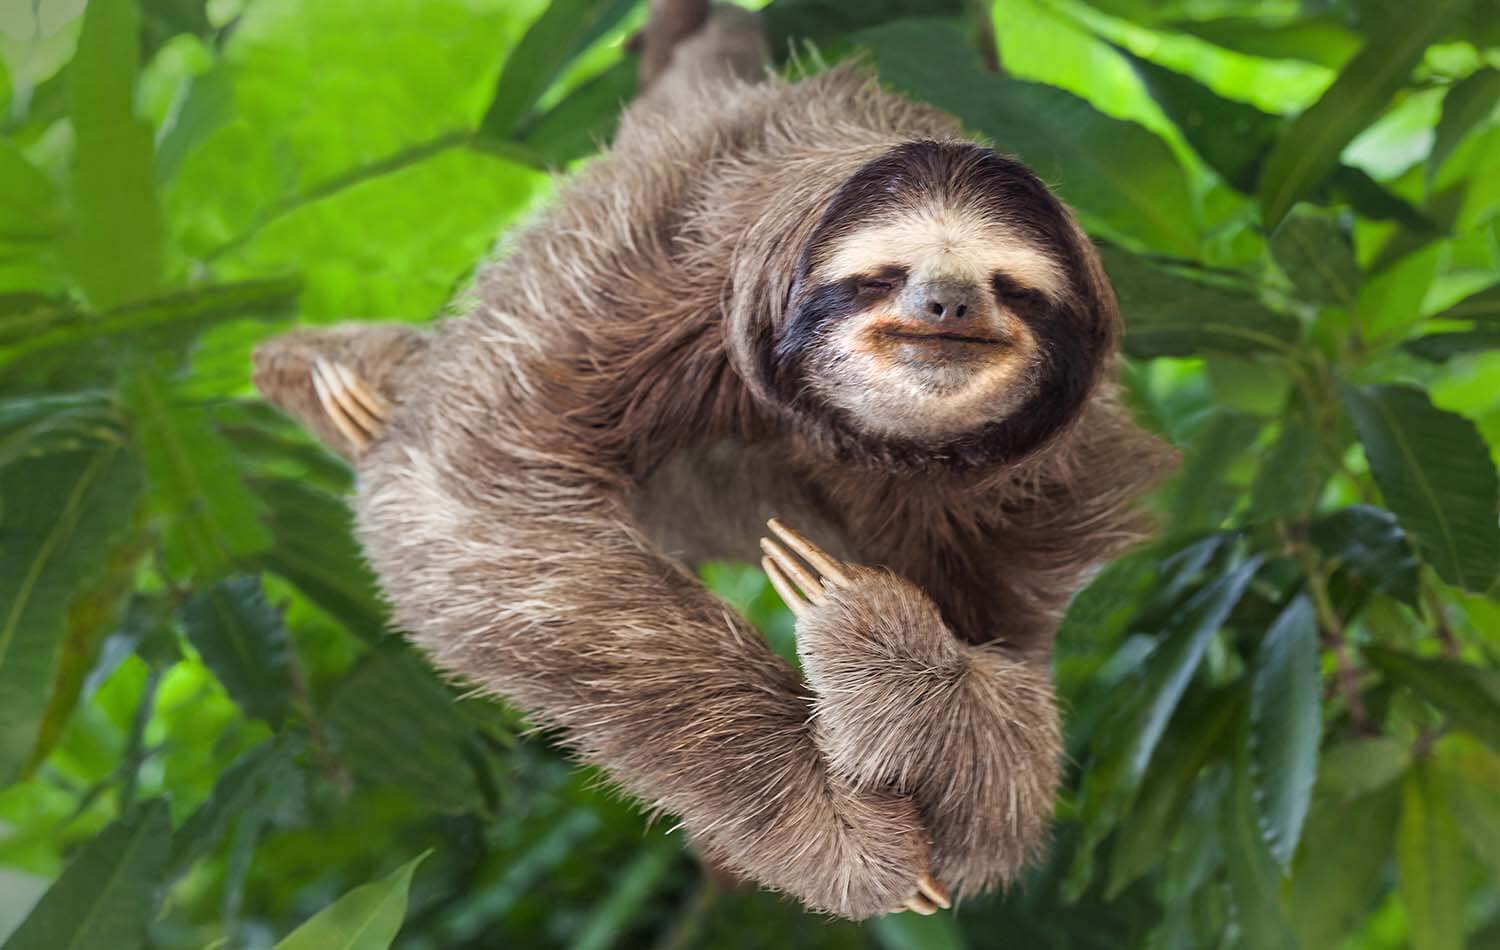 The Amazon sloth